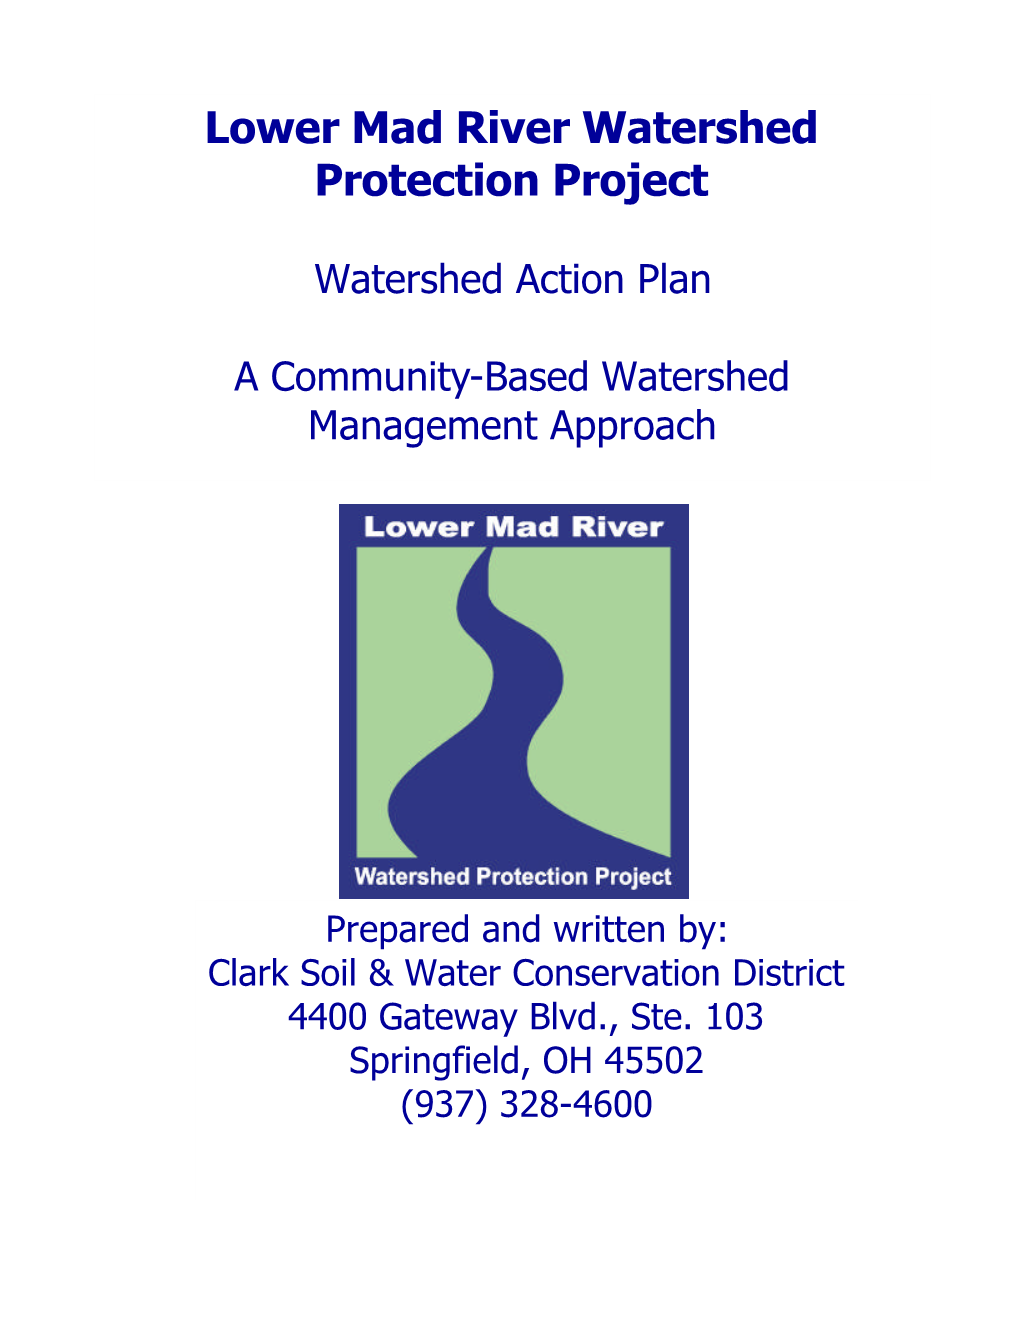 Prepared and Written By: Clark Soil & Water Conservation District 4400 Gateway Blvd., Ste